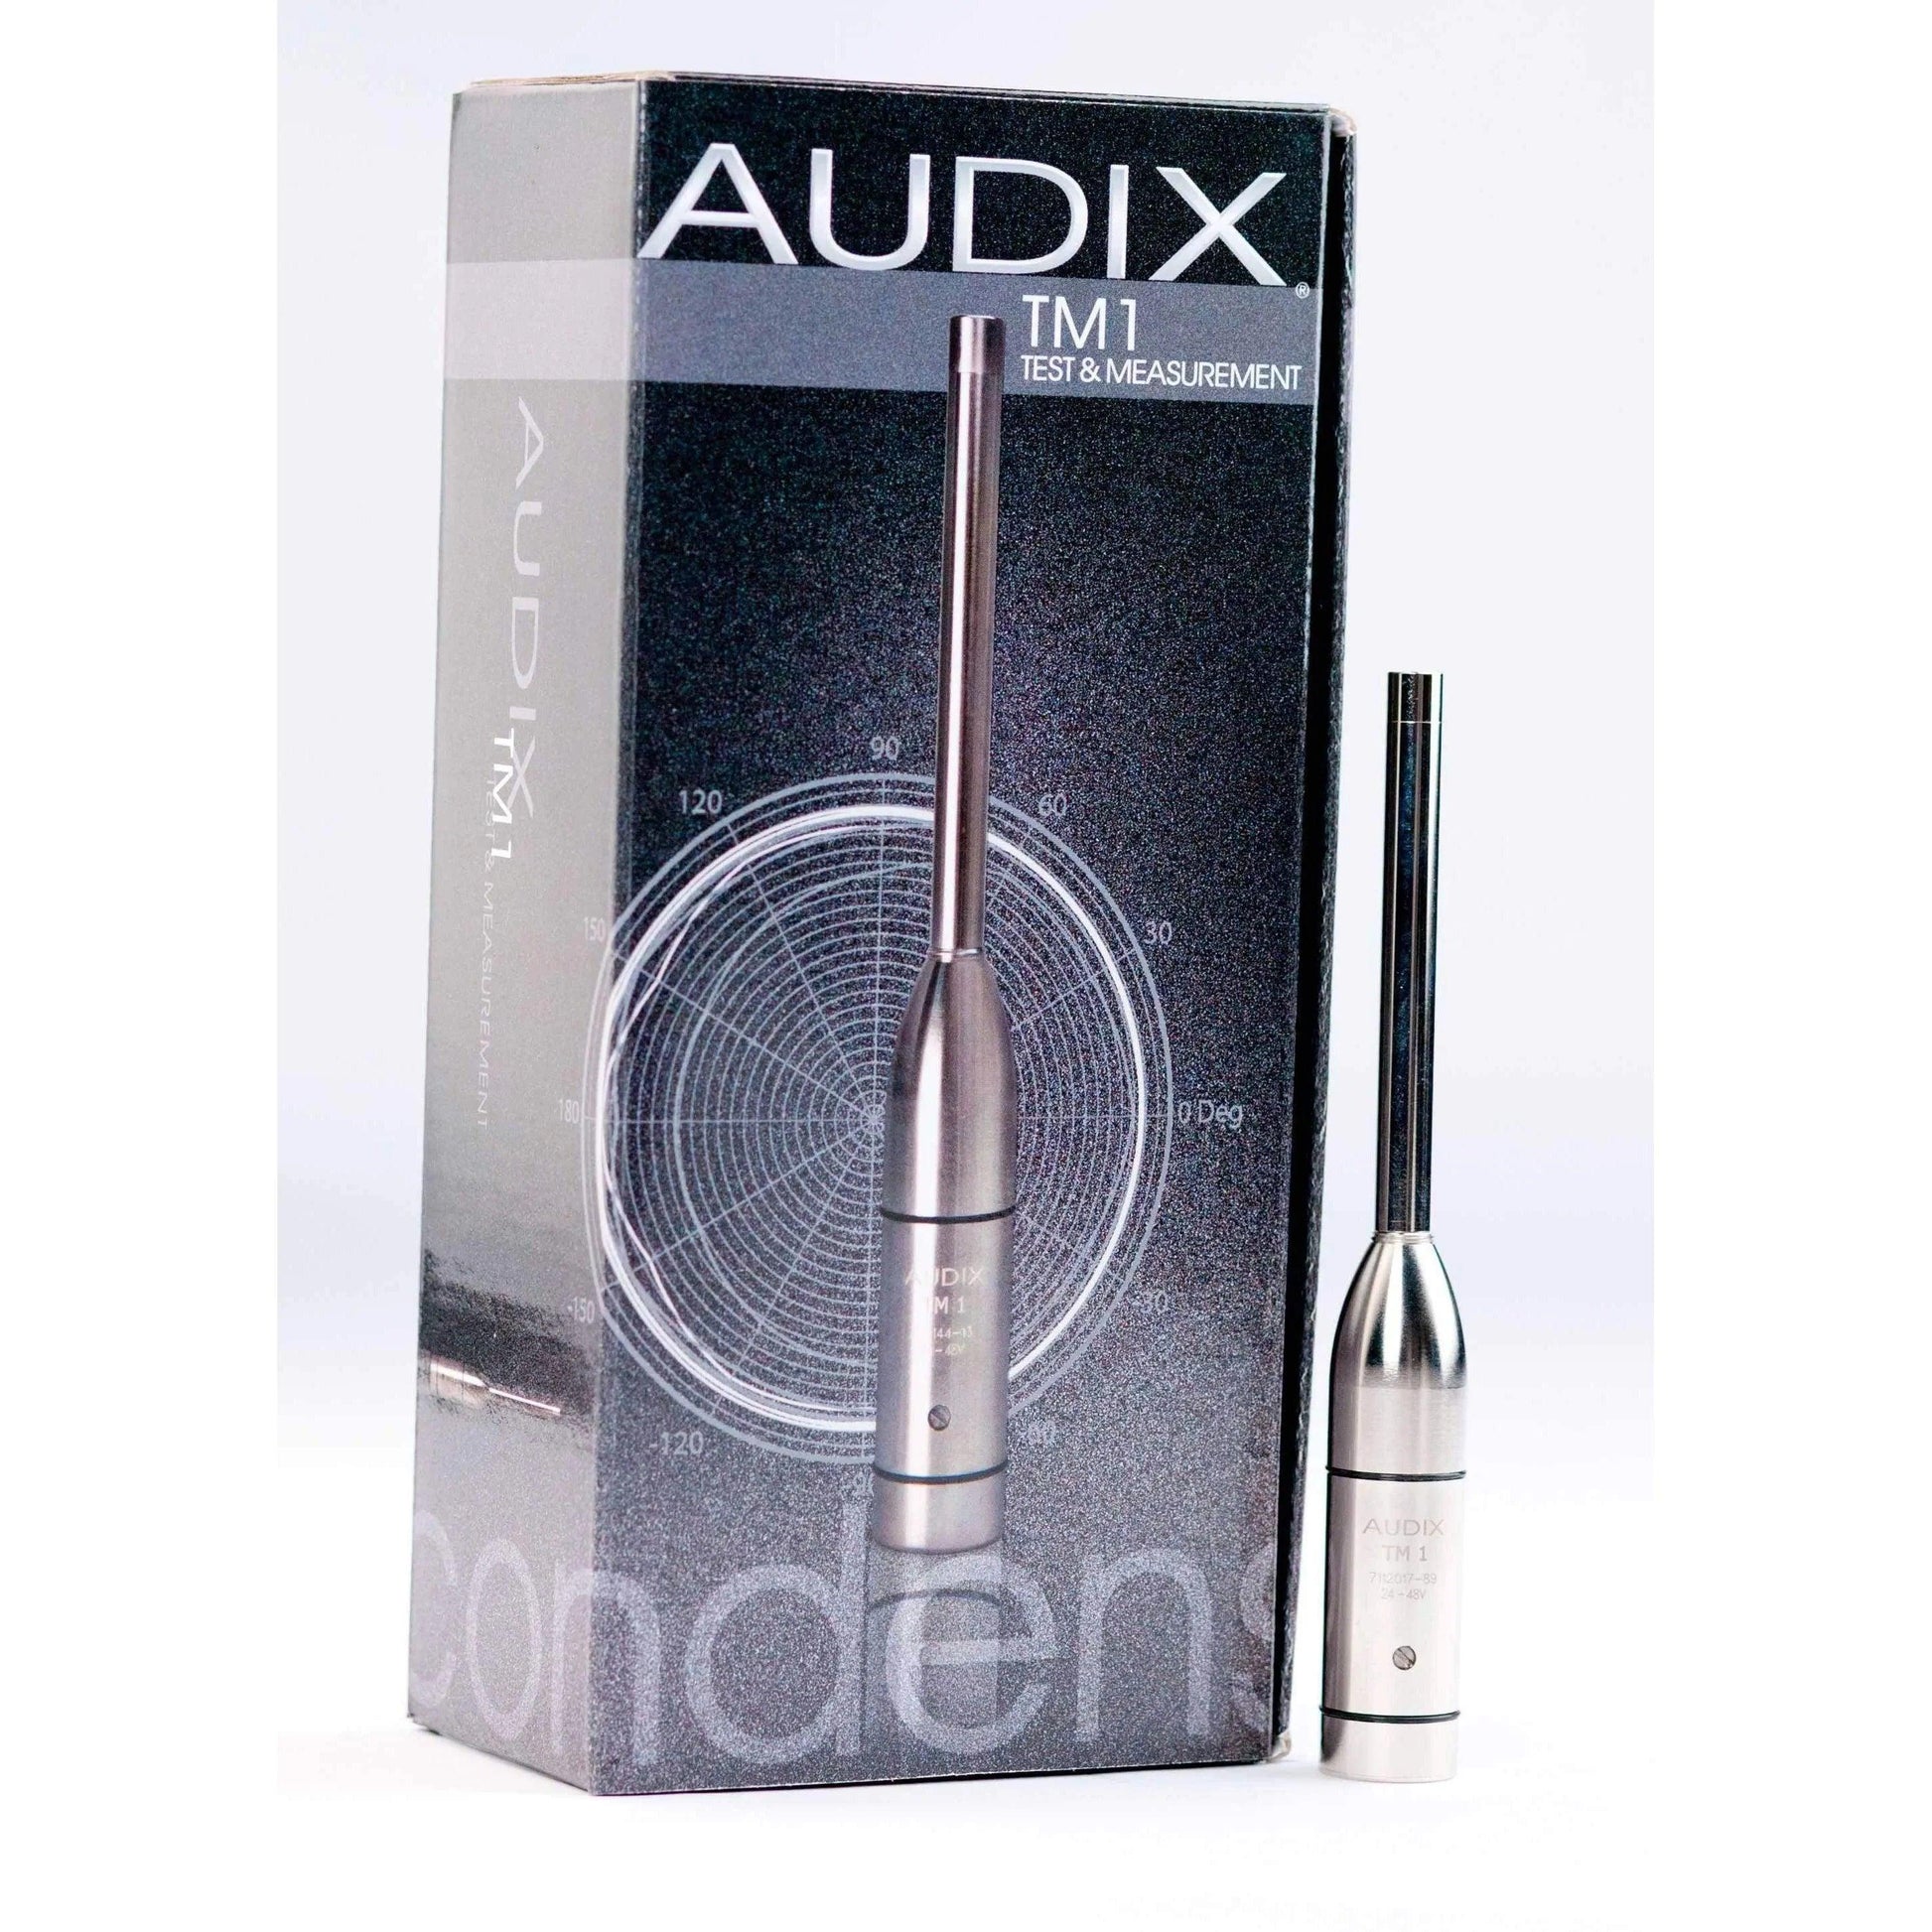 Audix TM1 Condenser Measurement Microphone